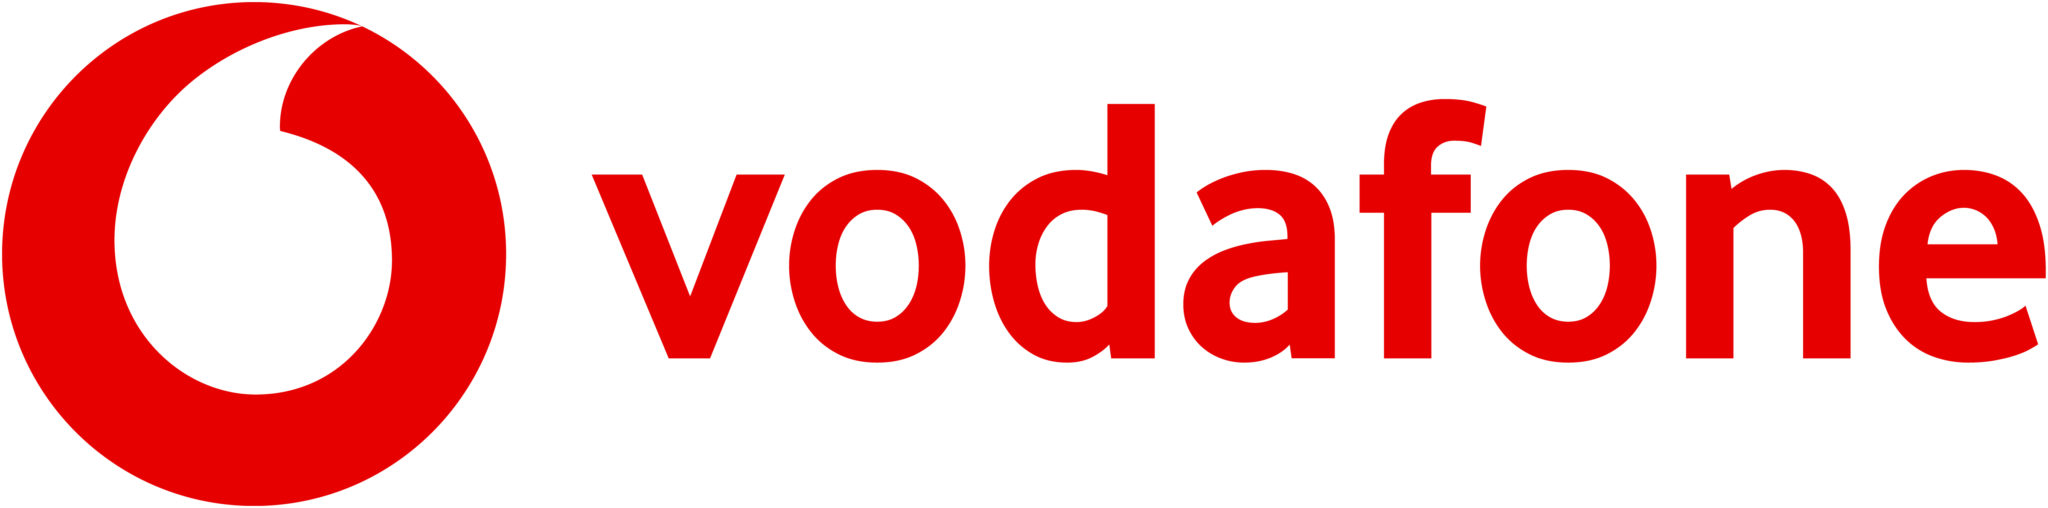 nuovo logo vodafone 2017